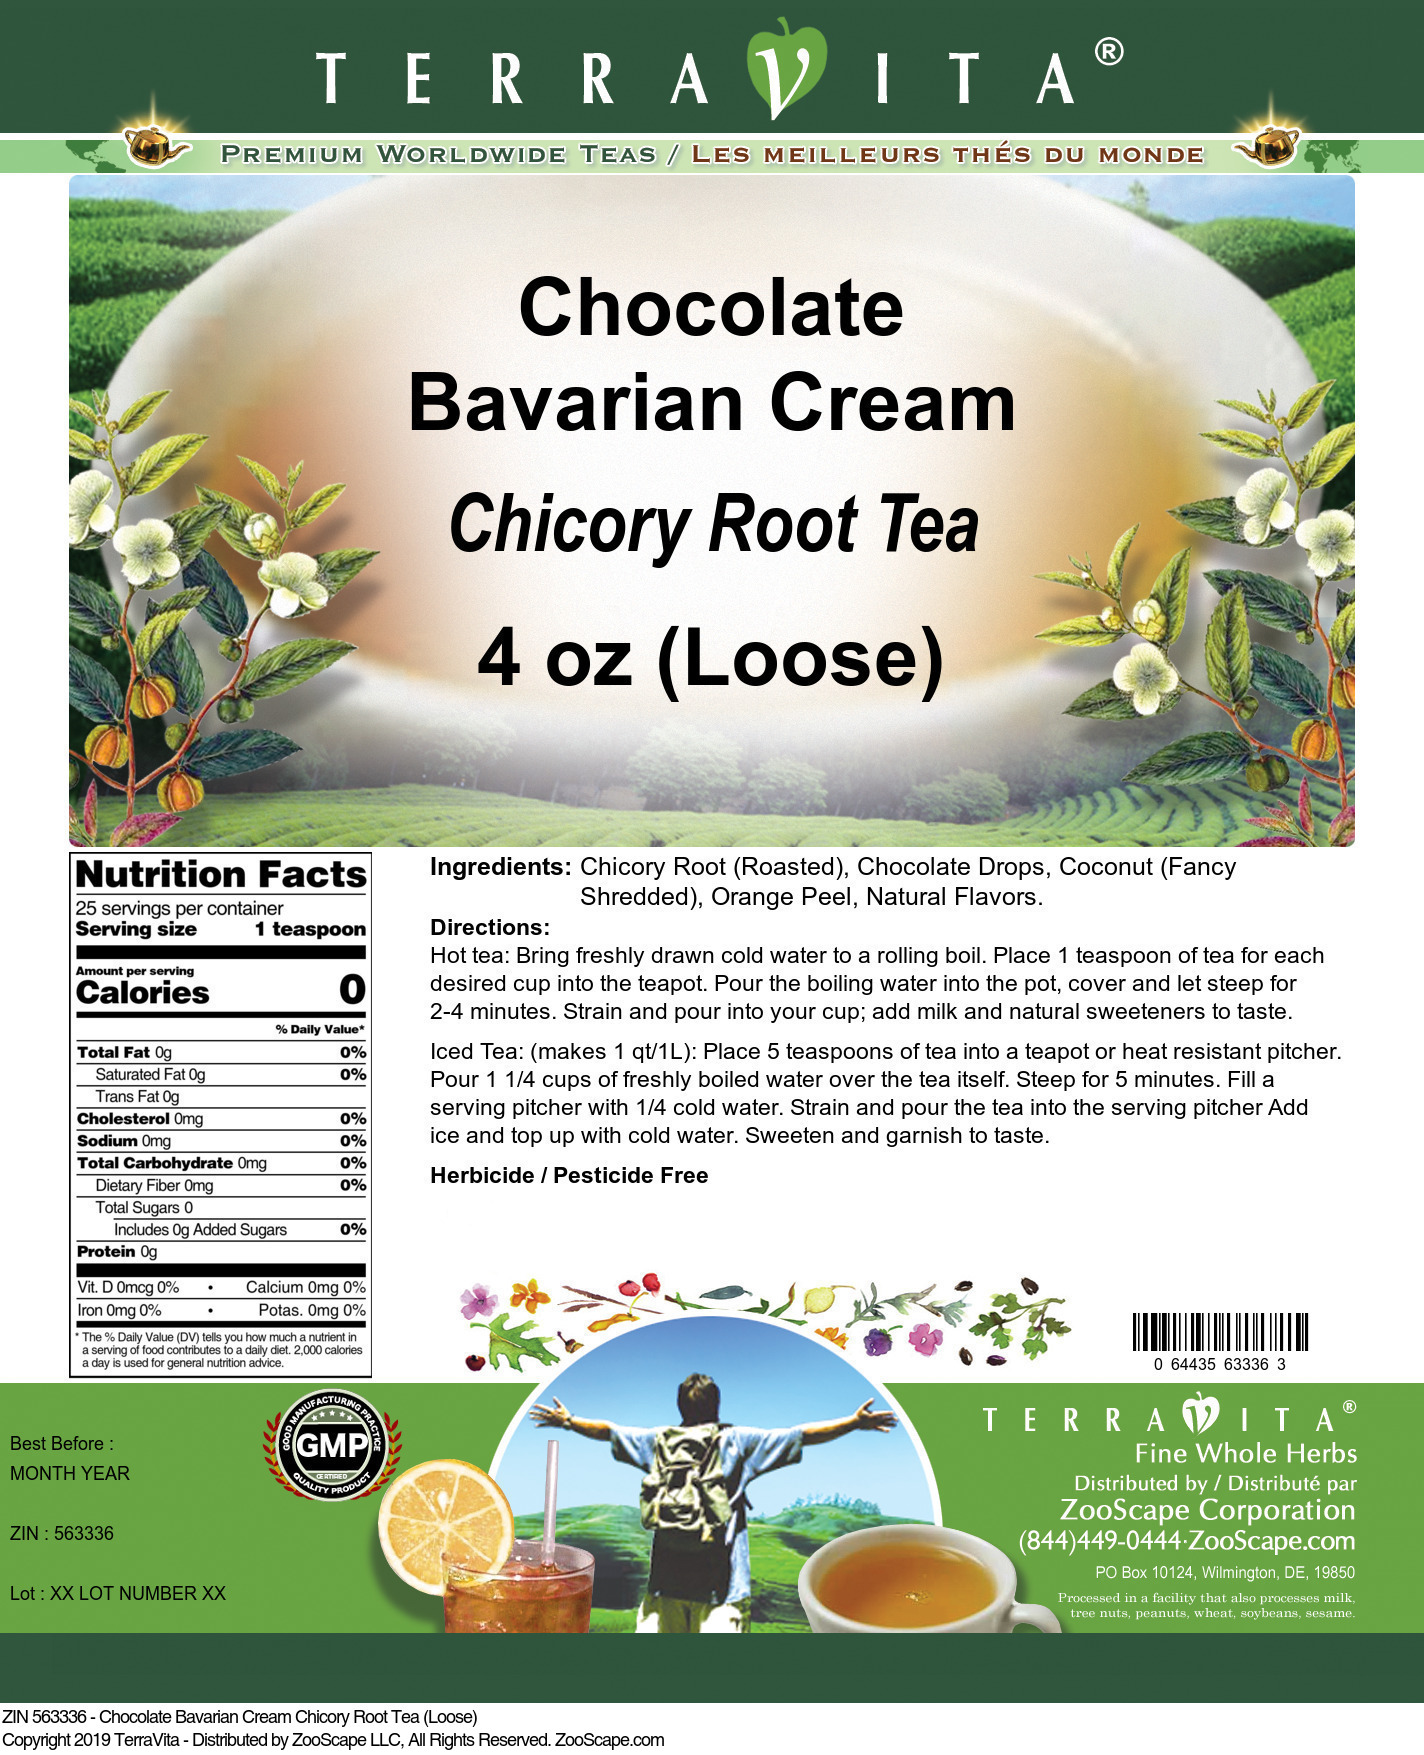 Chocolate Bavarian Cream Chicory Root Tea (Loose) - Label